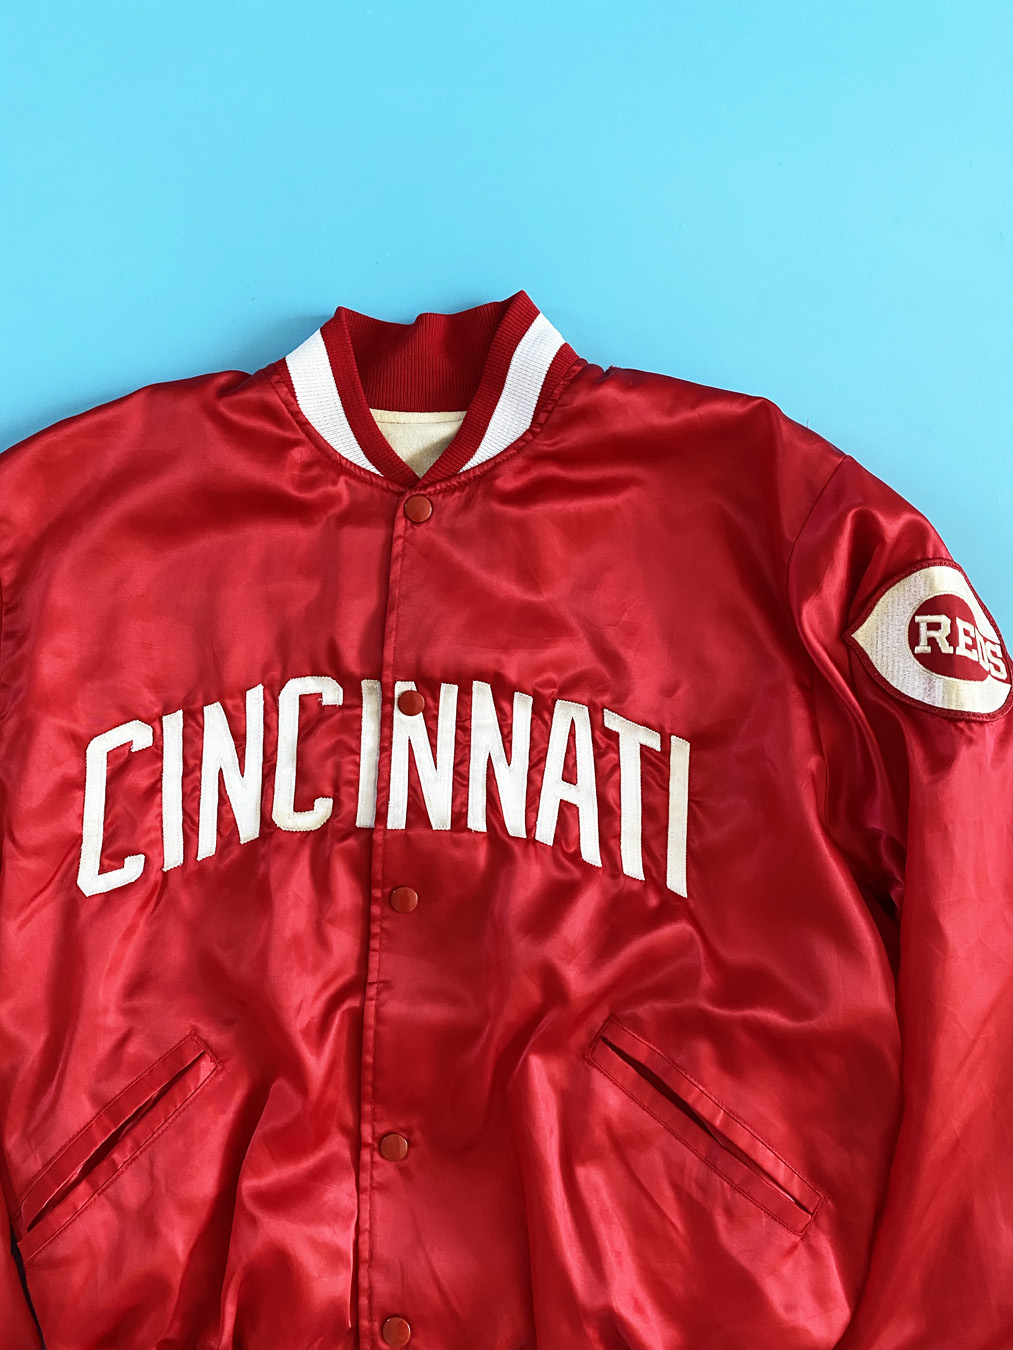 Cincinnati Reds Button Up Shirt - William Jacket